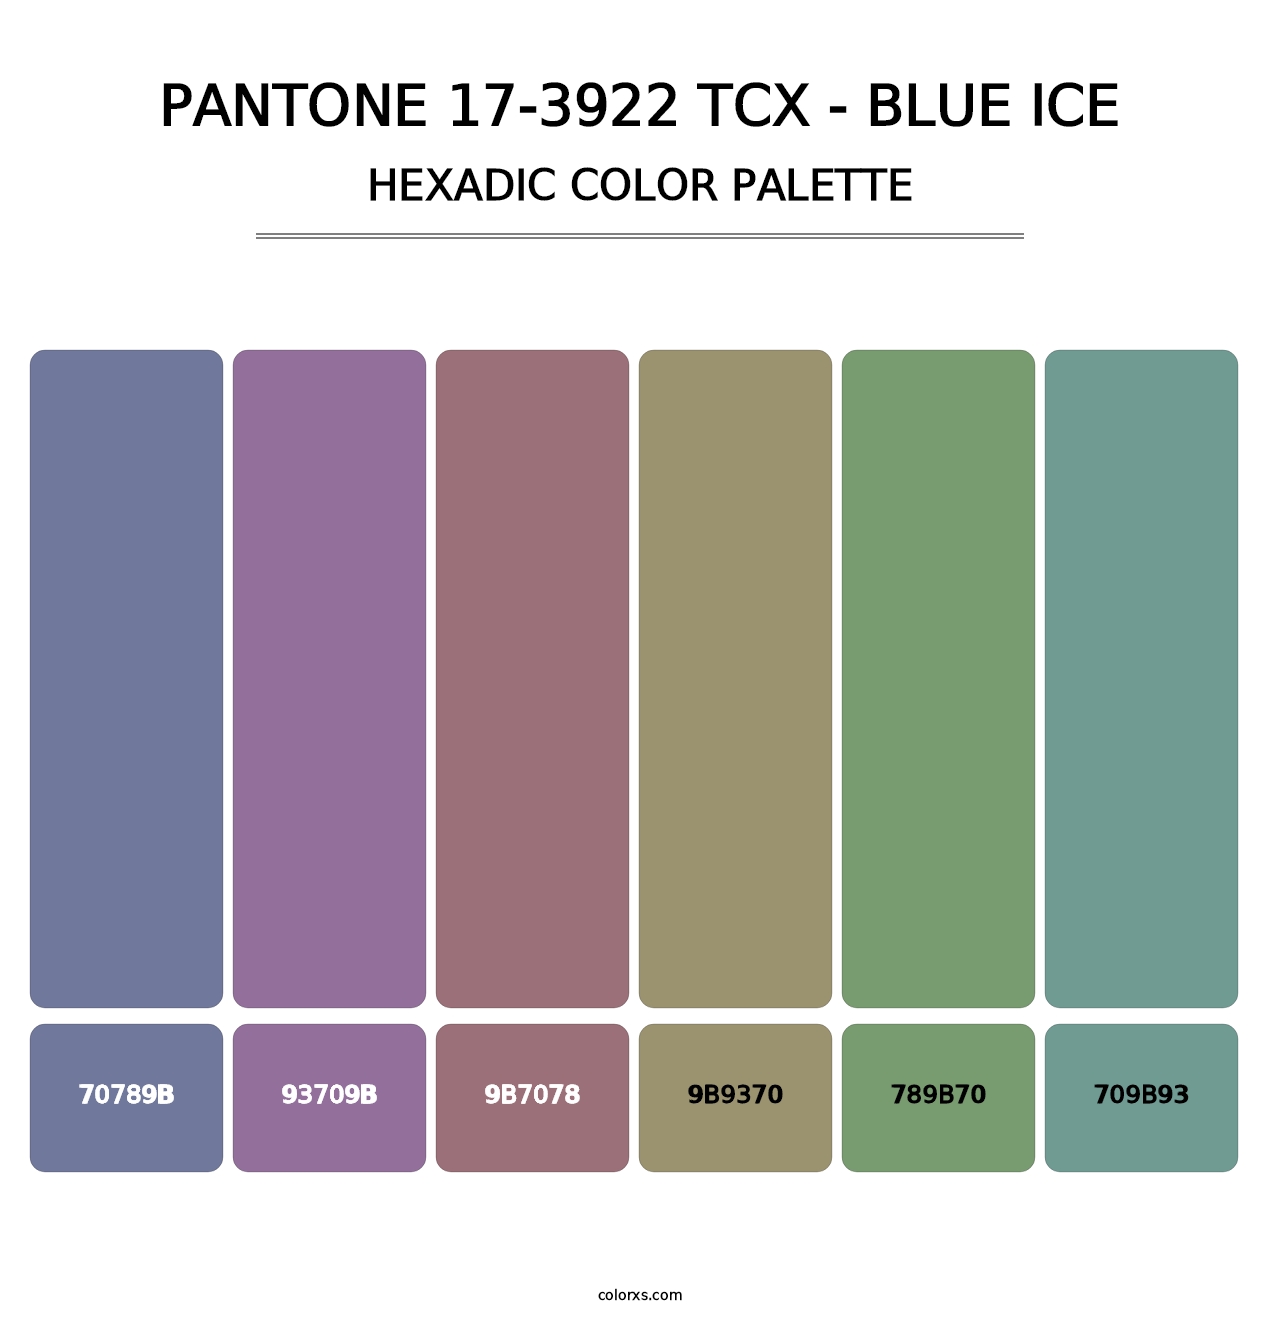 PANTONE 17-3922 TCX - Blue Ice - Hexadic Color Palette